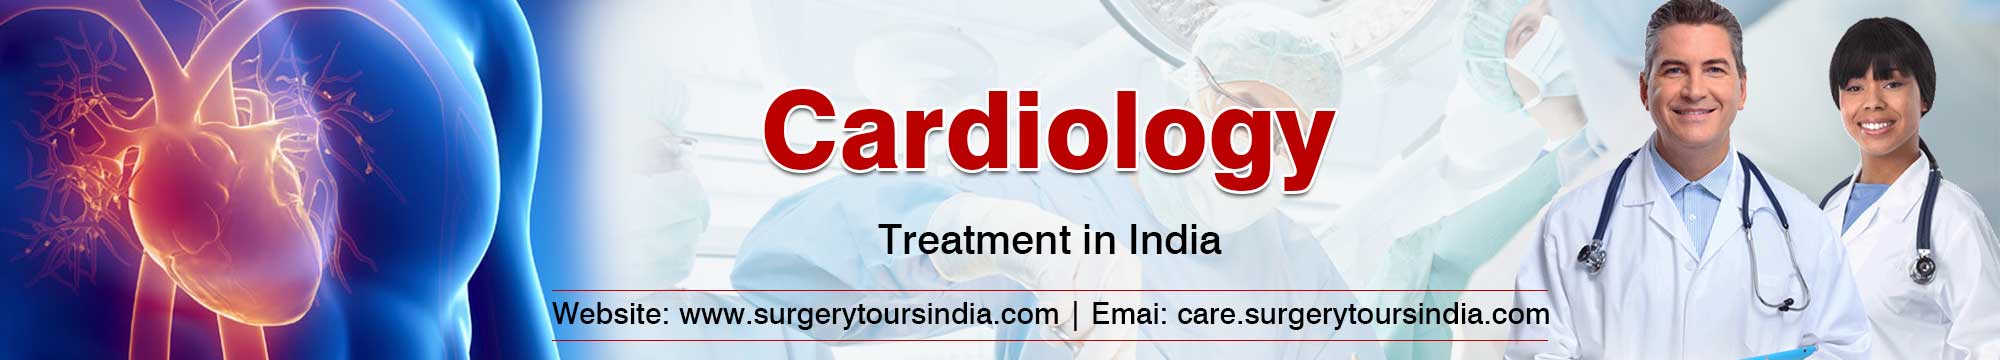 Cardiology Surgery